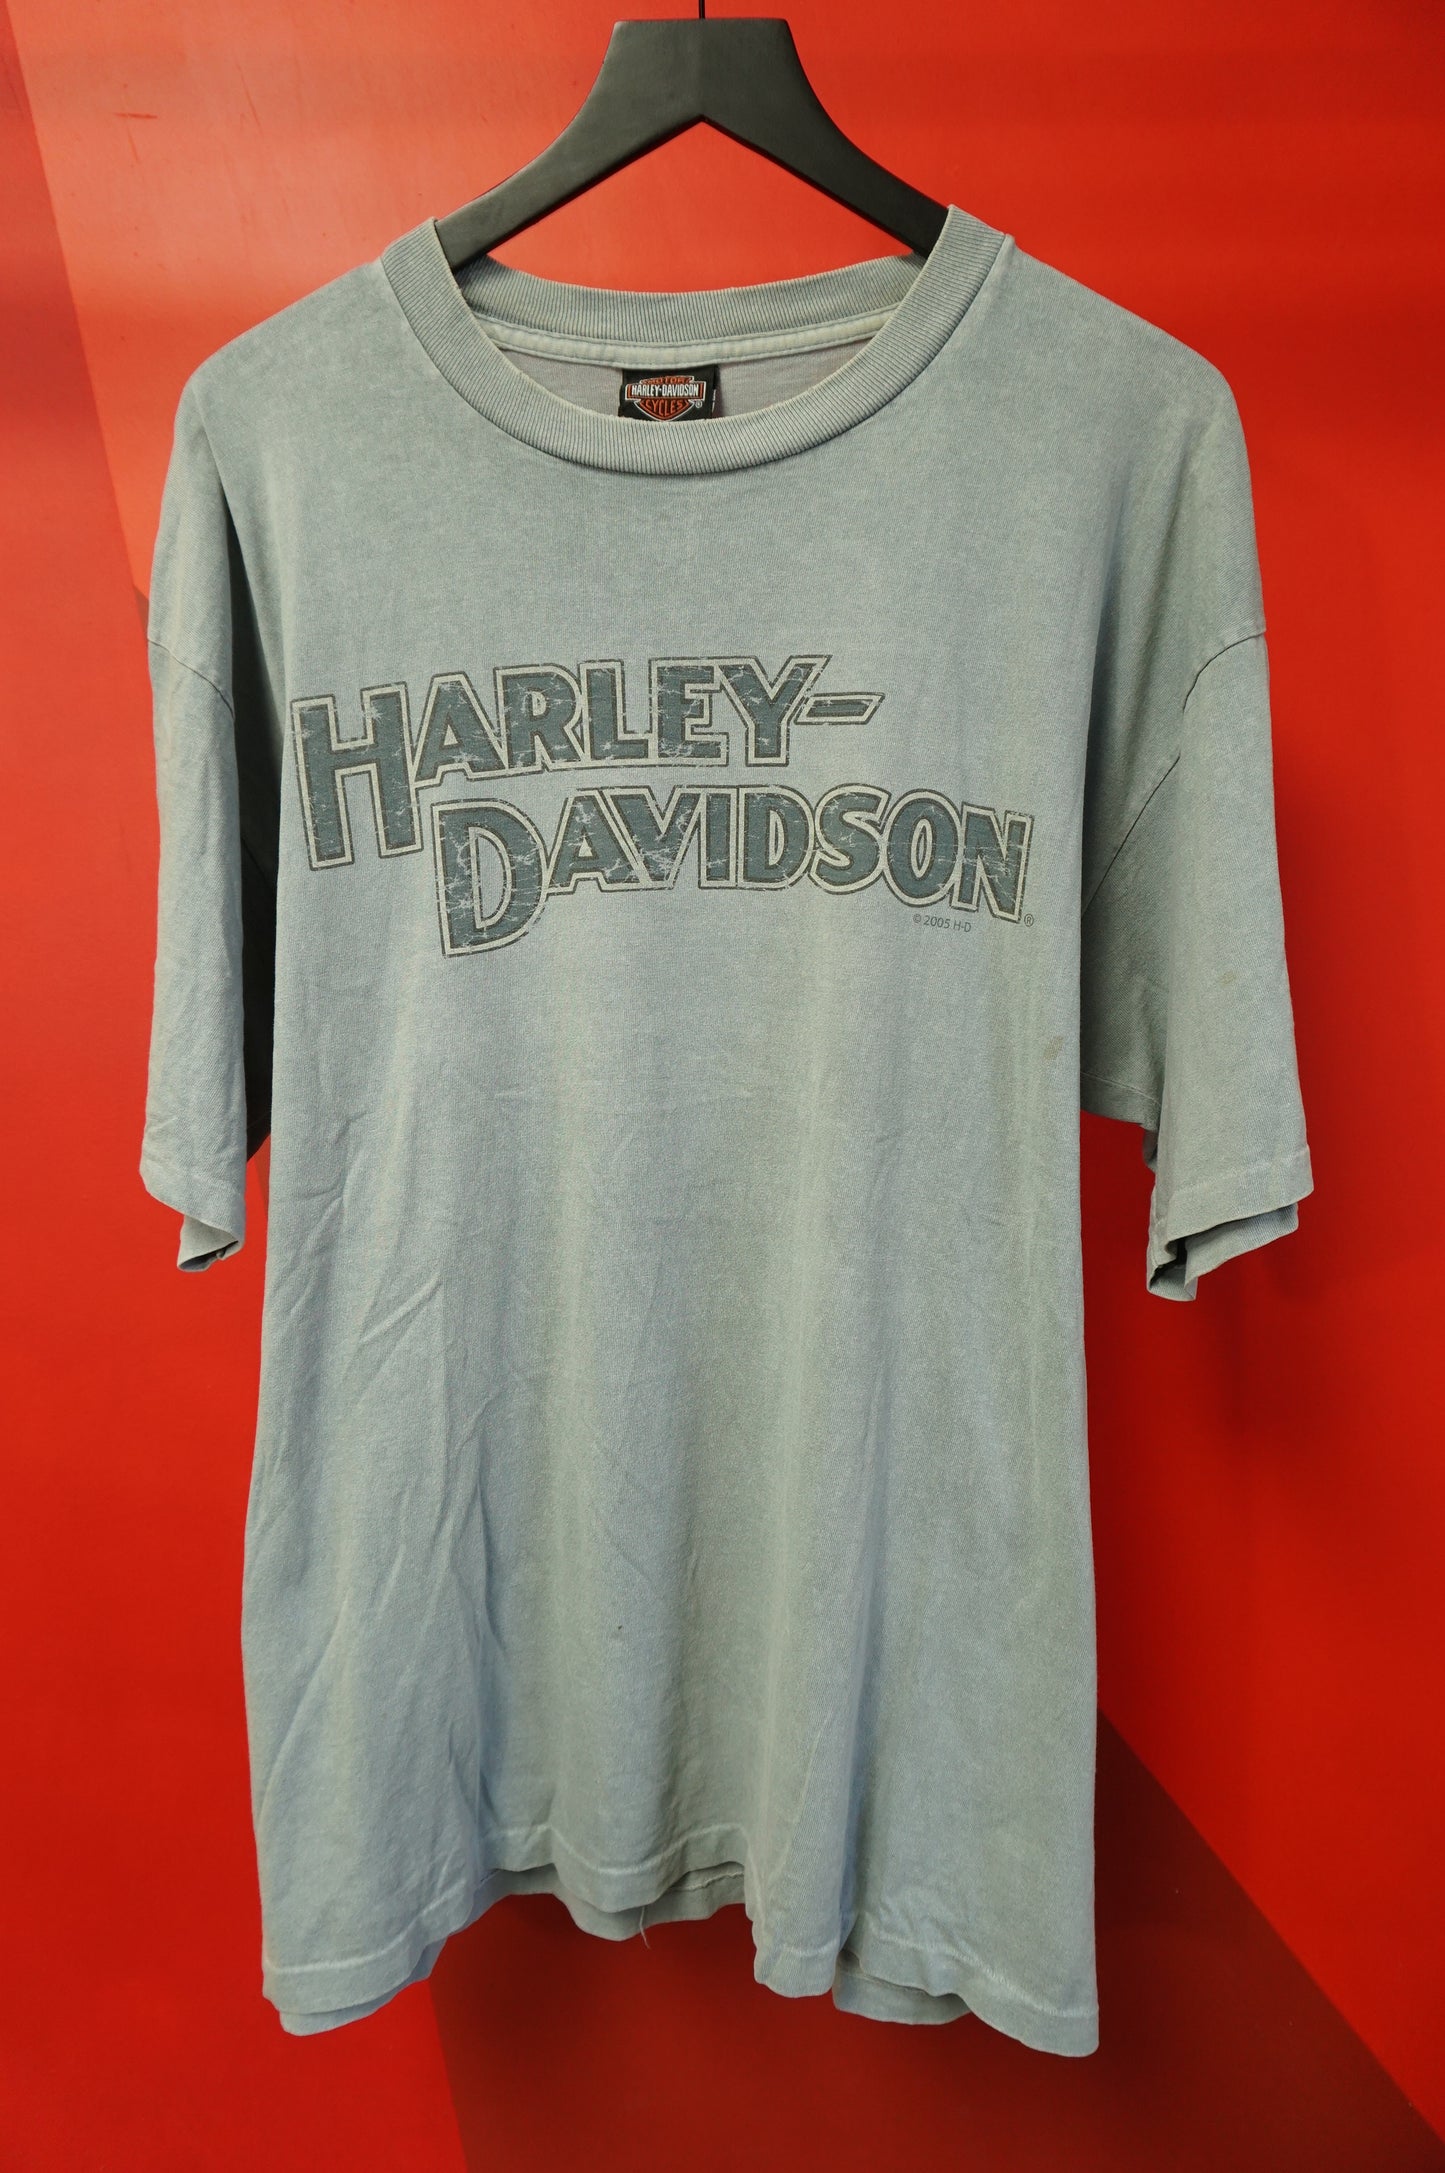 (L/XL) 2005 Paducah Harley Davidson Single Stitch T-Shirt